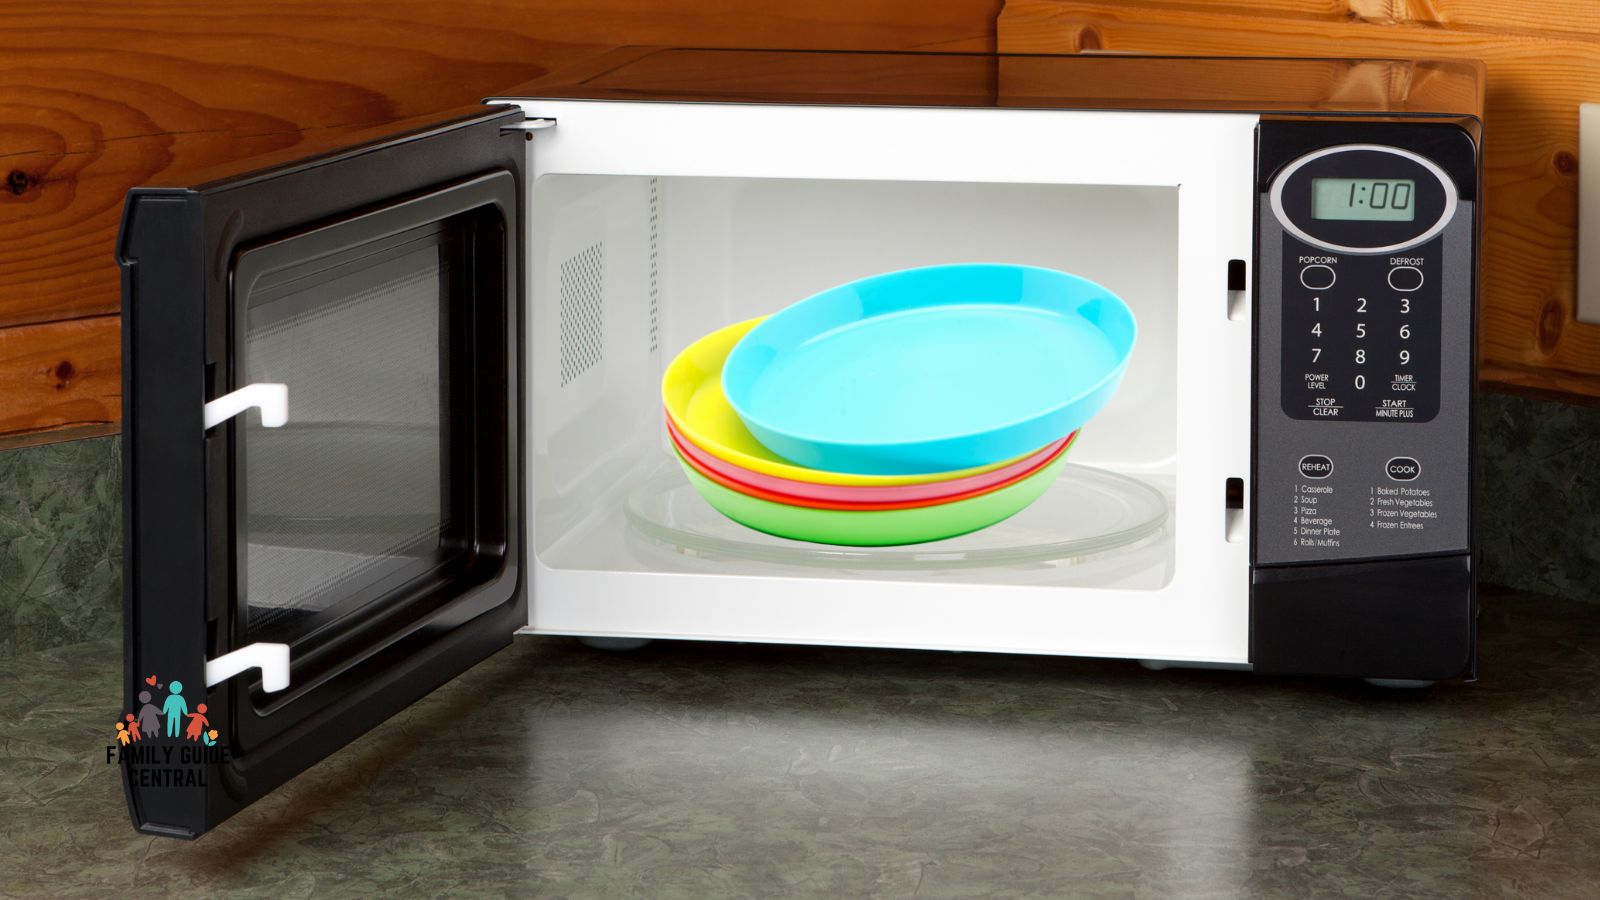 Plastic plates inside microwaves - familyguidecentral.com